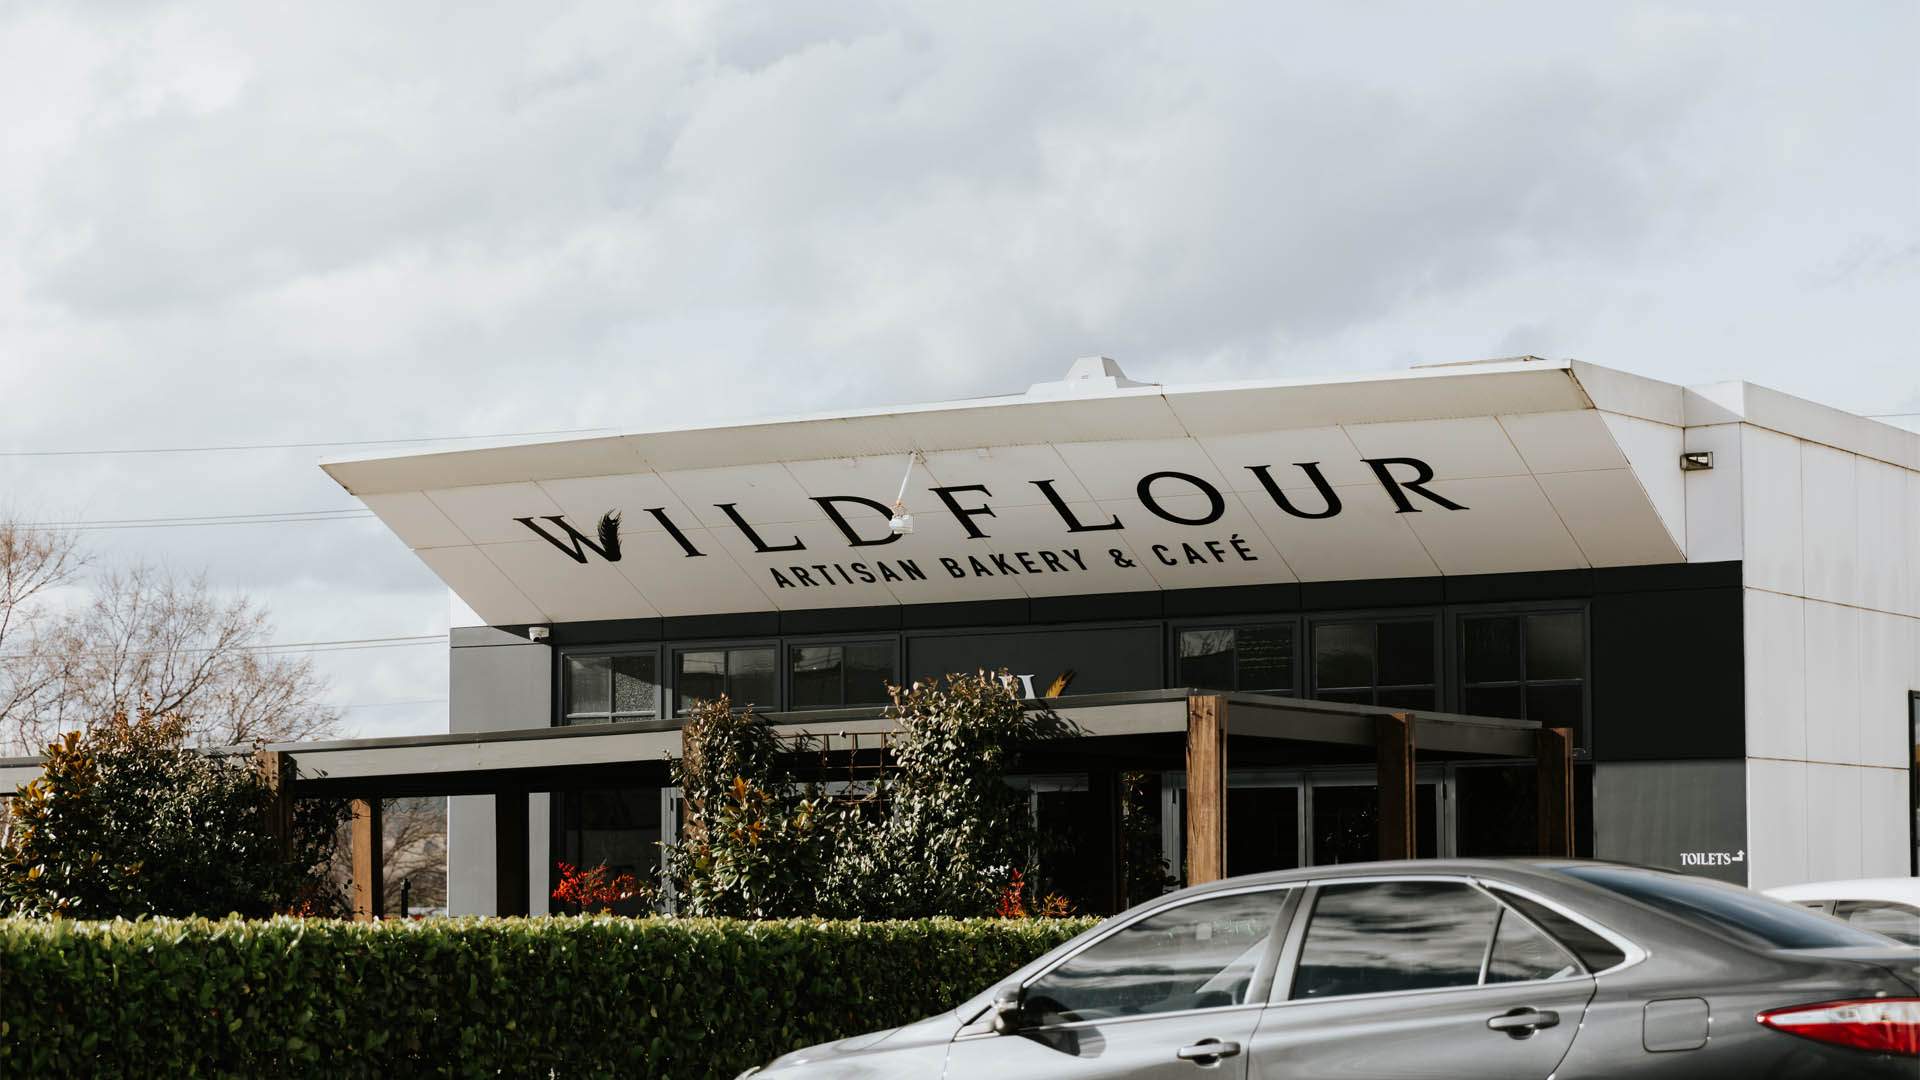 Wildflour Artisan Bakery and Cafe